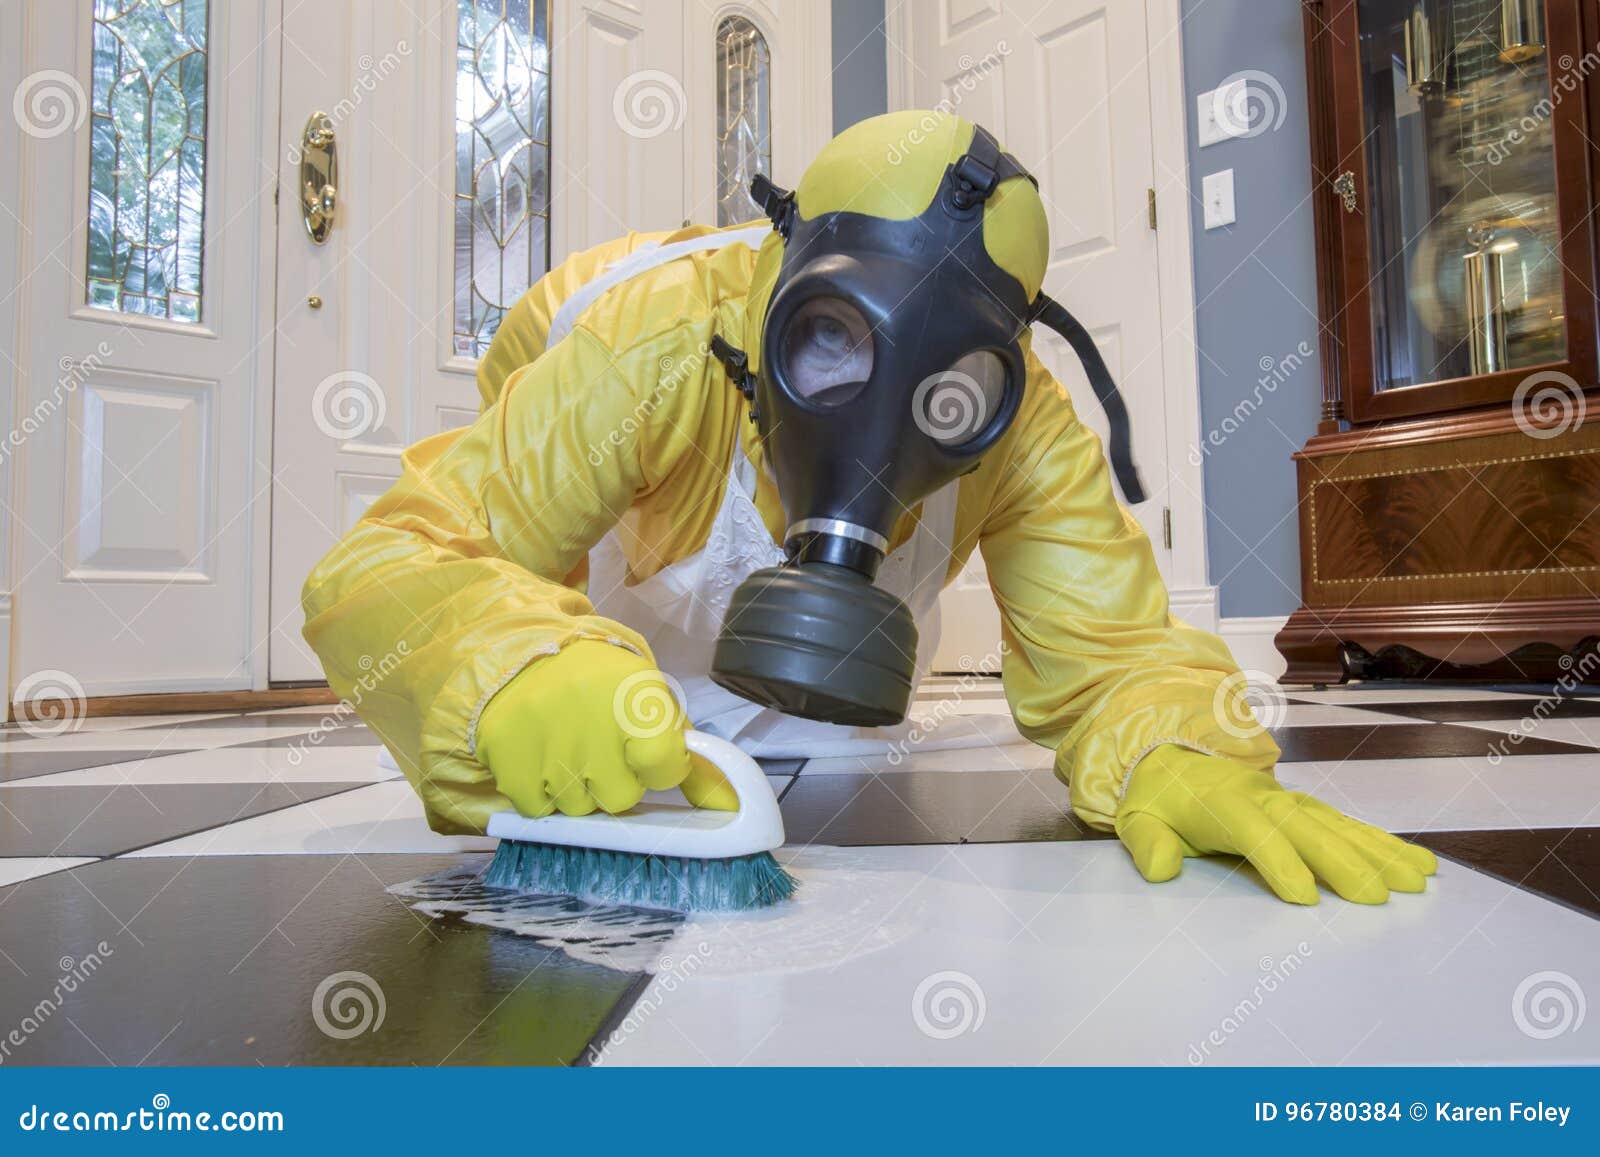 mature woman in haz mat suit scrubbing floor with brush